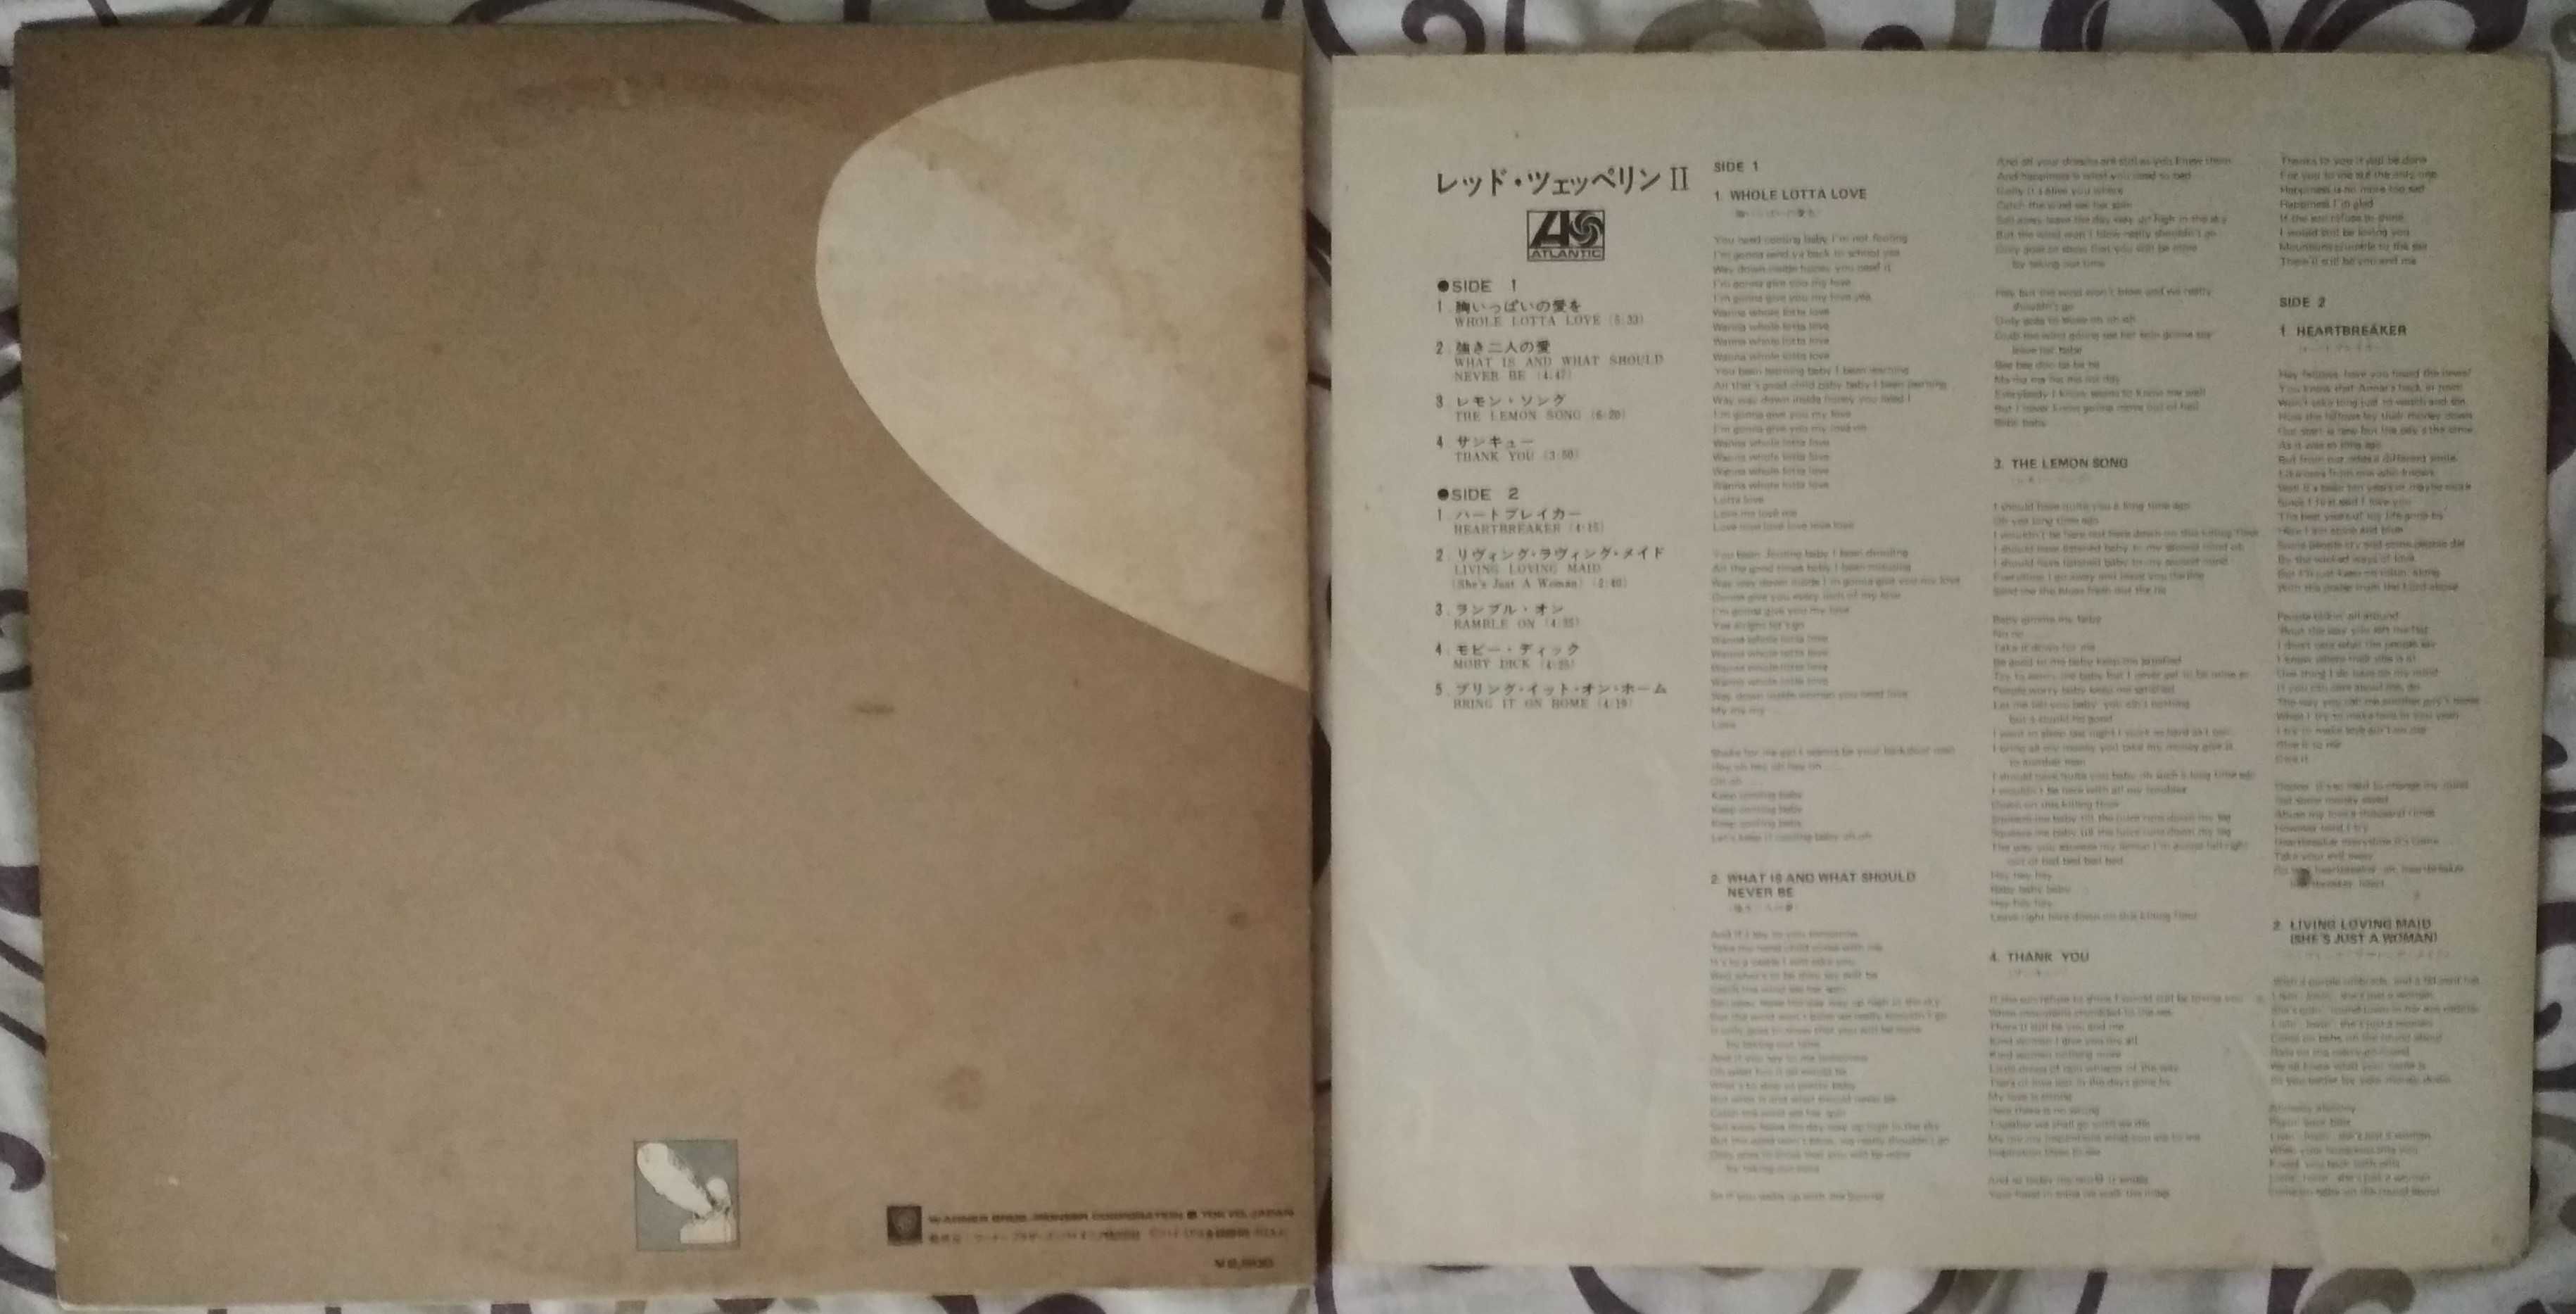 Пластинка Led Zeppelin II (1971, Atlantic P 10101A, M, GF, OIS, Japan)